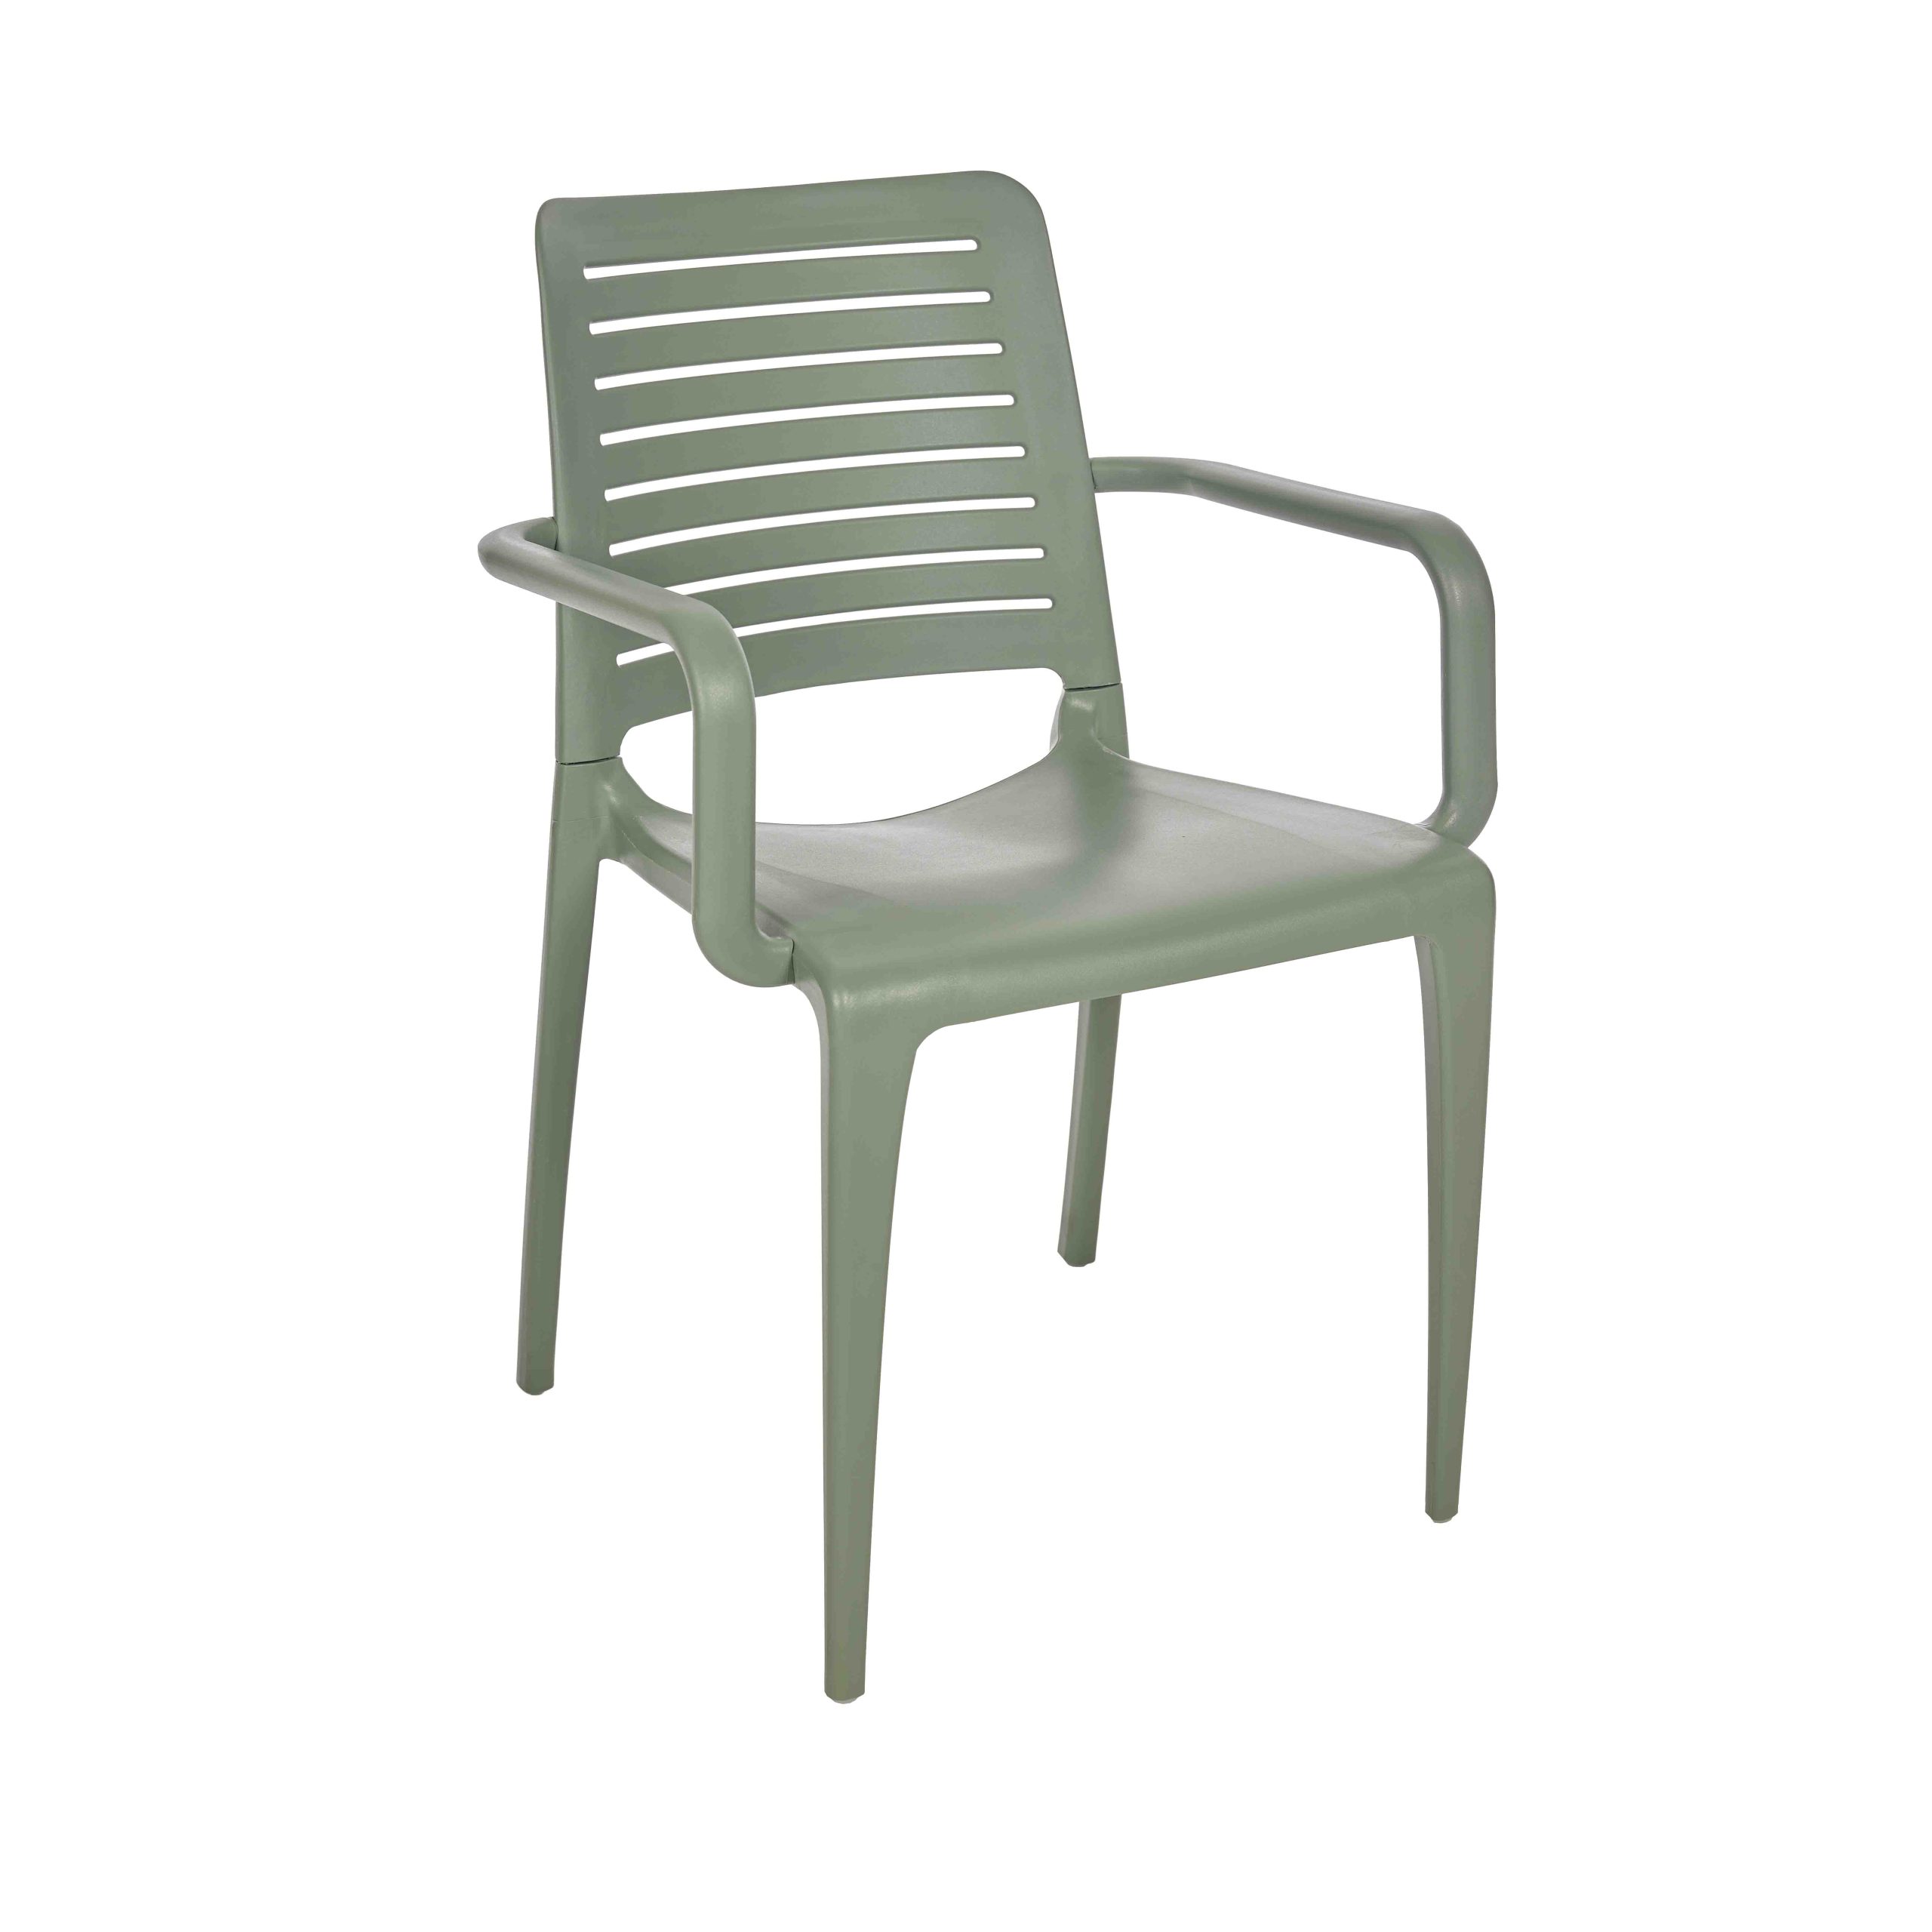 AD hotelska oprema Fotelja 09 - Olive boje slika proizvoda